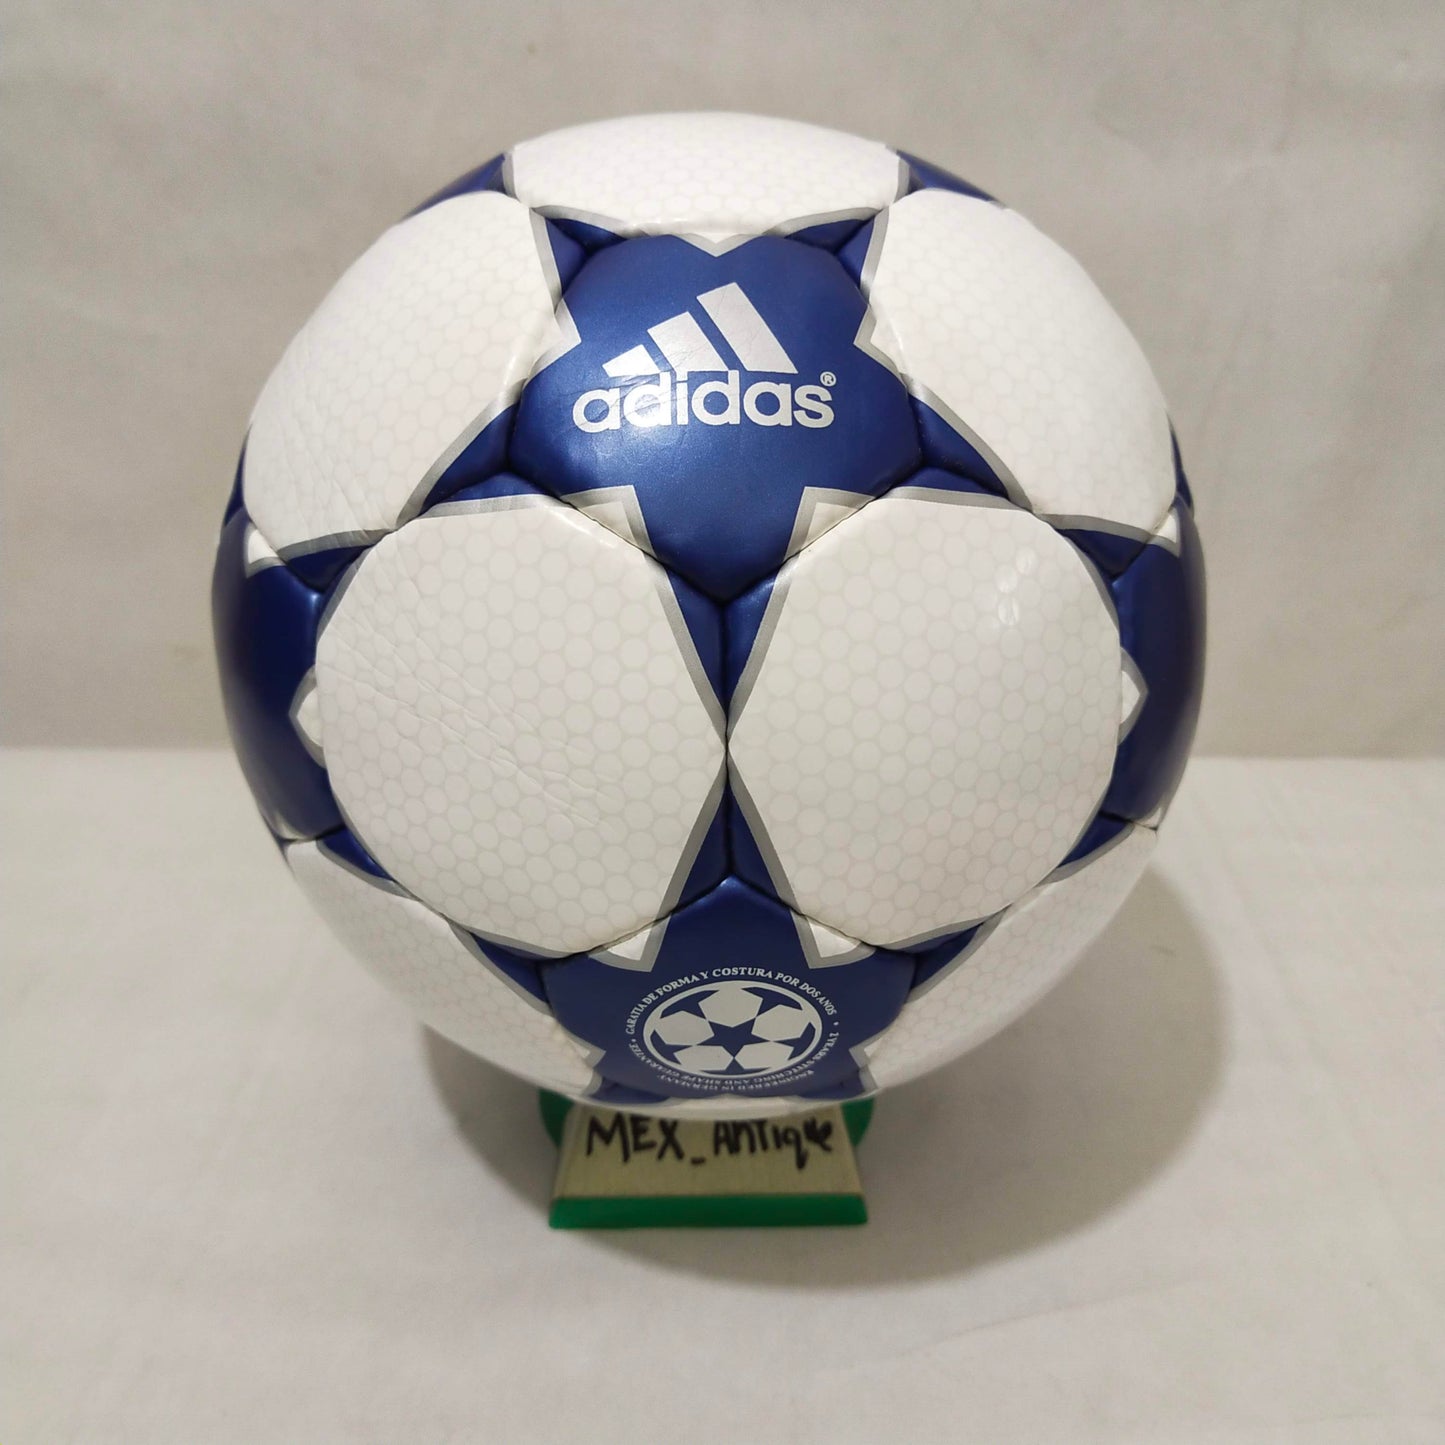 Adidas Finale 3 | 2003-2004 | UEFA Champions League Ball | Size 5 06